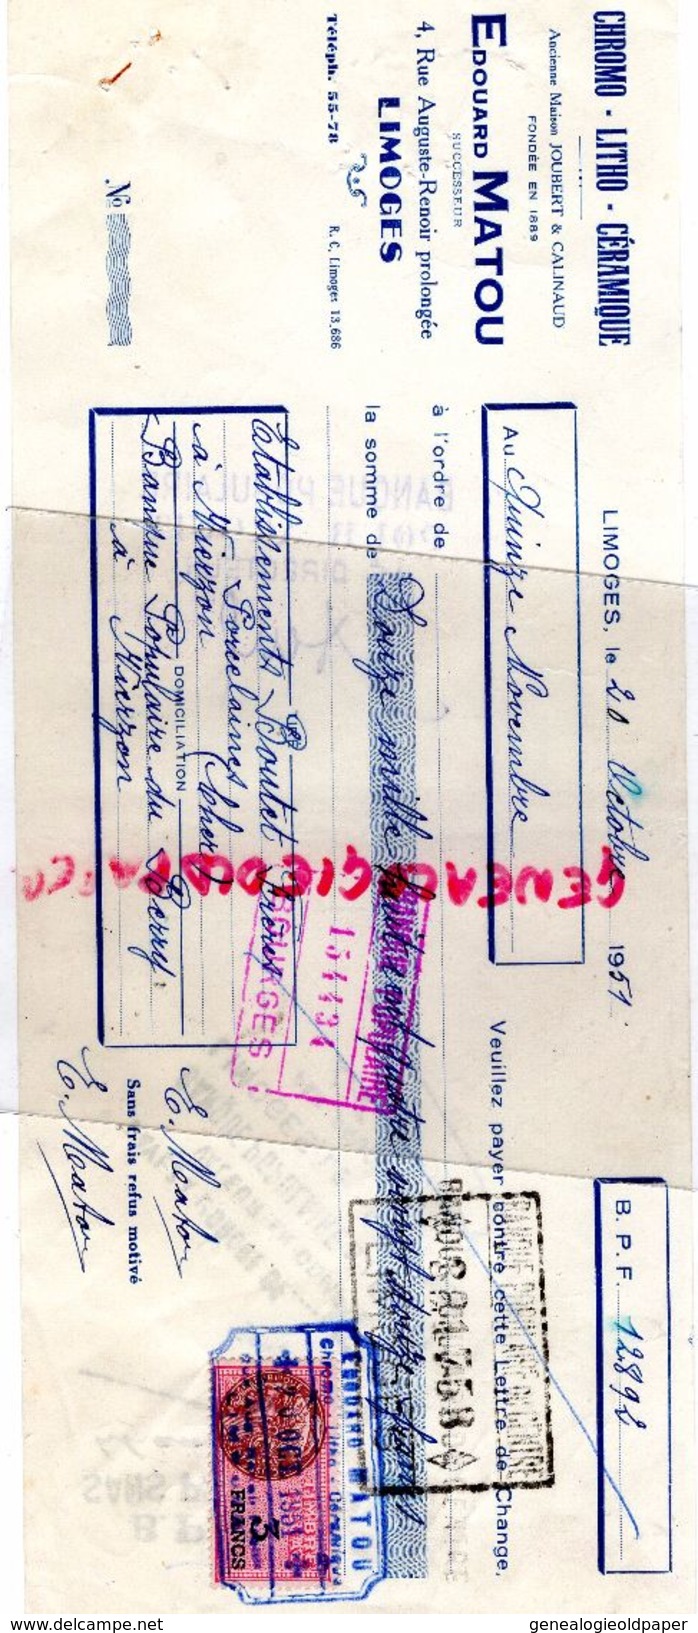 87- LIMOGES- TRAITE EDOUARD MATOU- CHROMO LITHO CERAMIQUE- JOUBERT CALINAUD- 4 RUE AUGUSTE RENOIR PROLONGEE- 1951 - Druck & Papierwaren